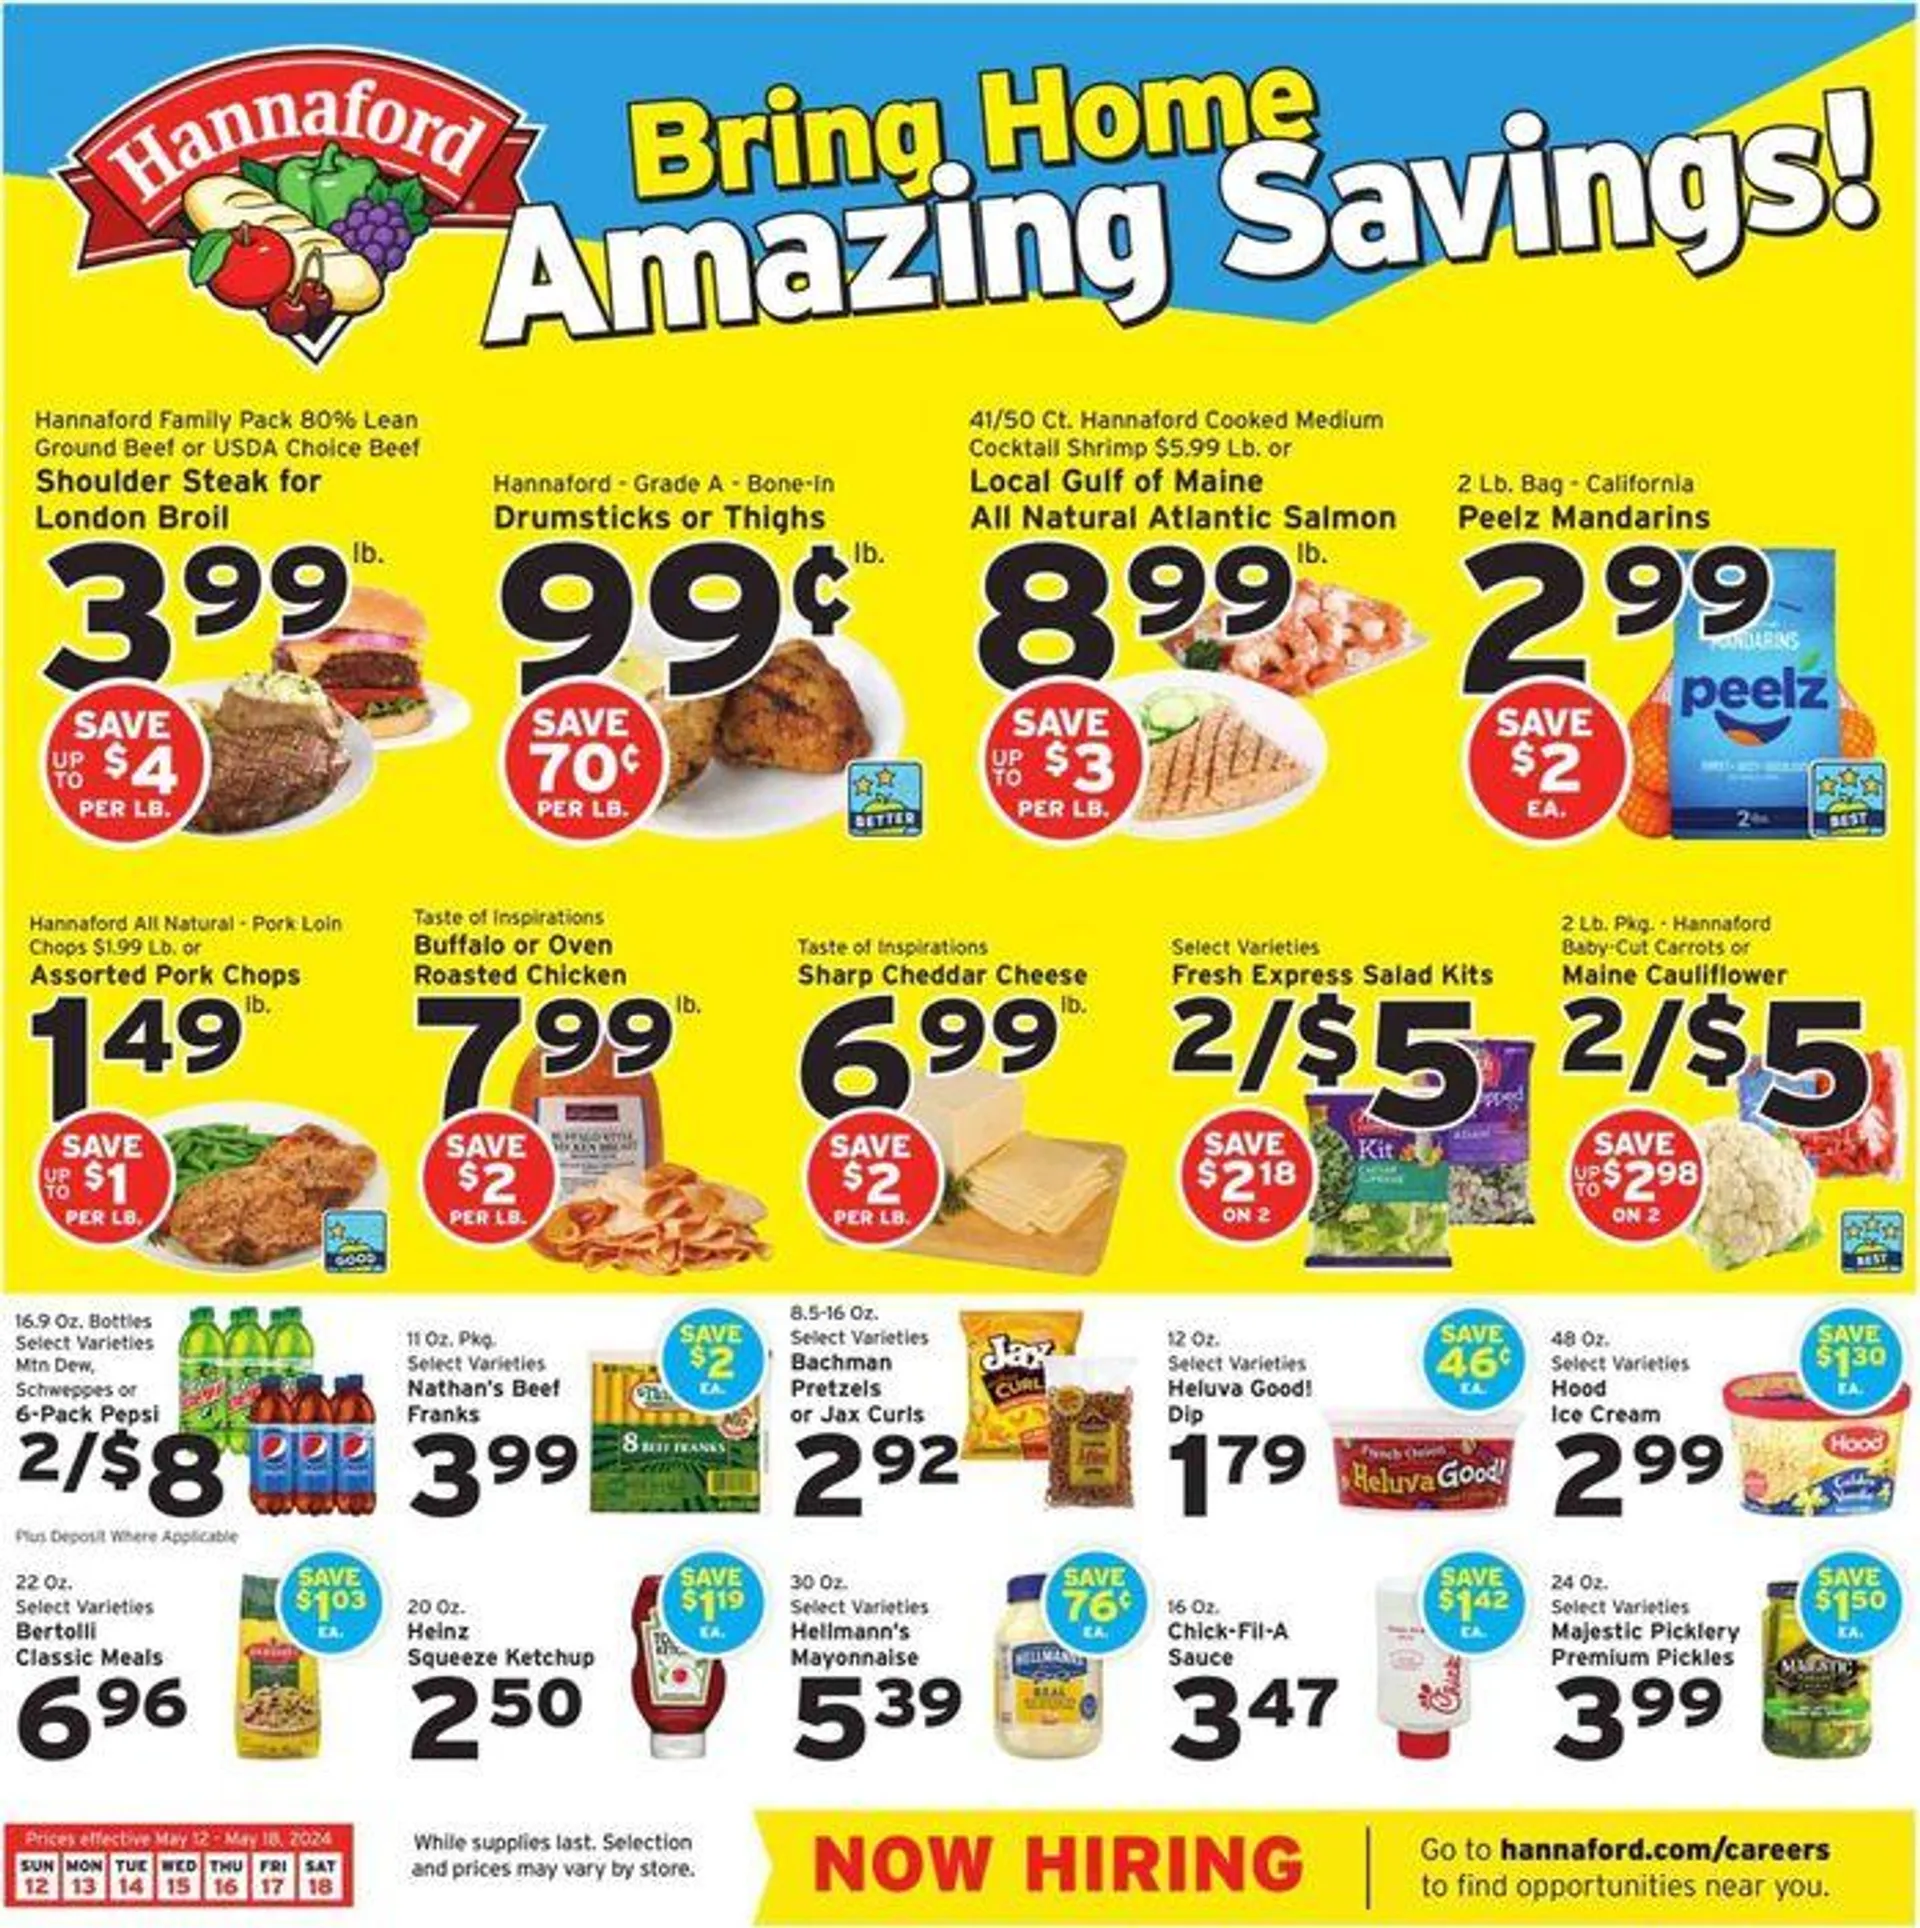 Bring Home Amazing Savings - 1